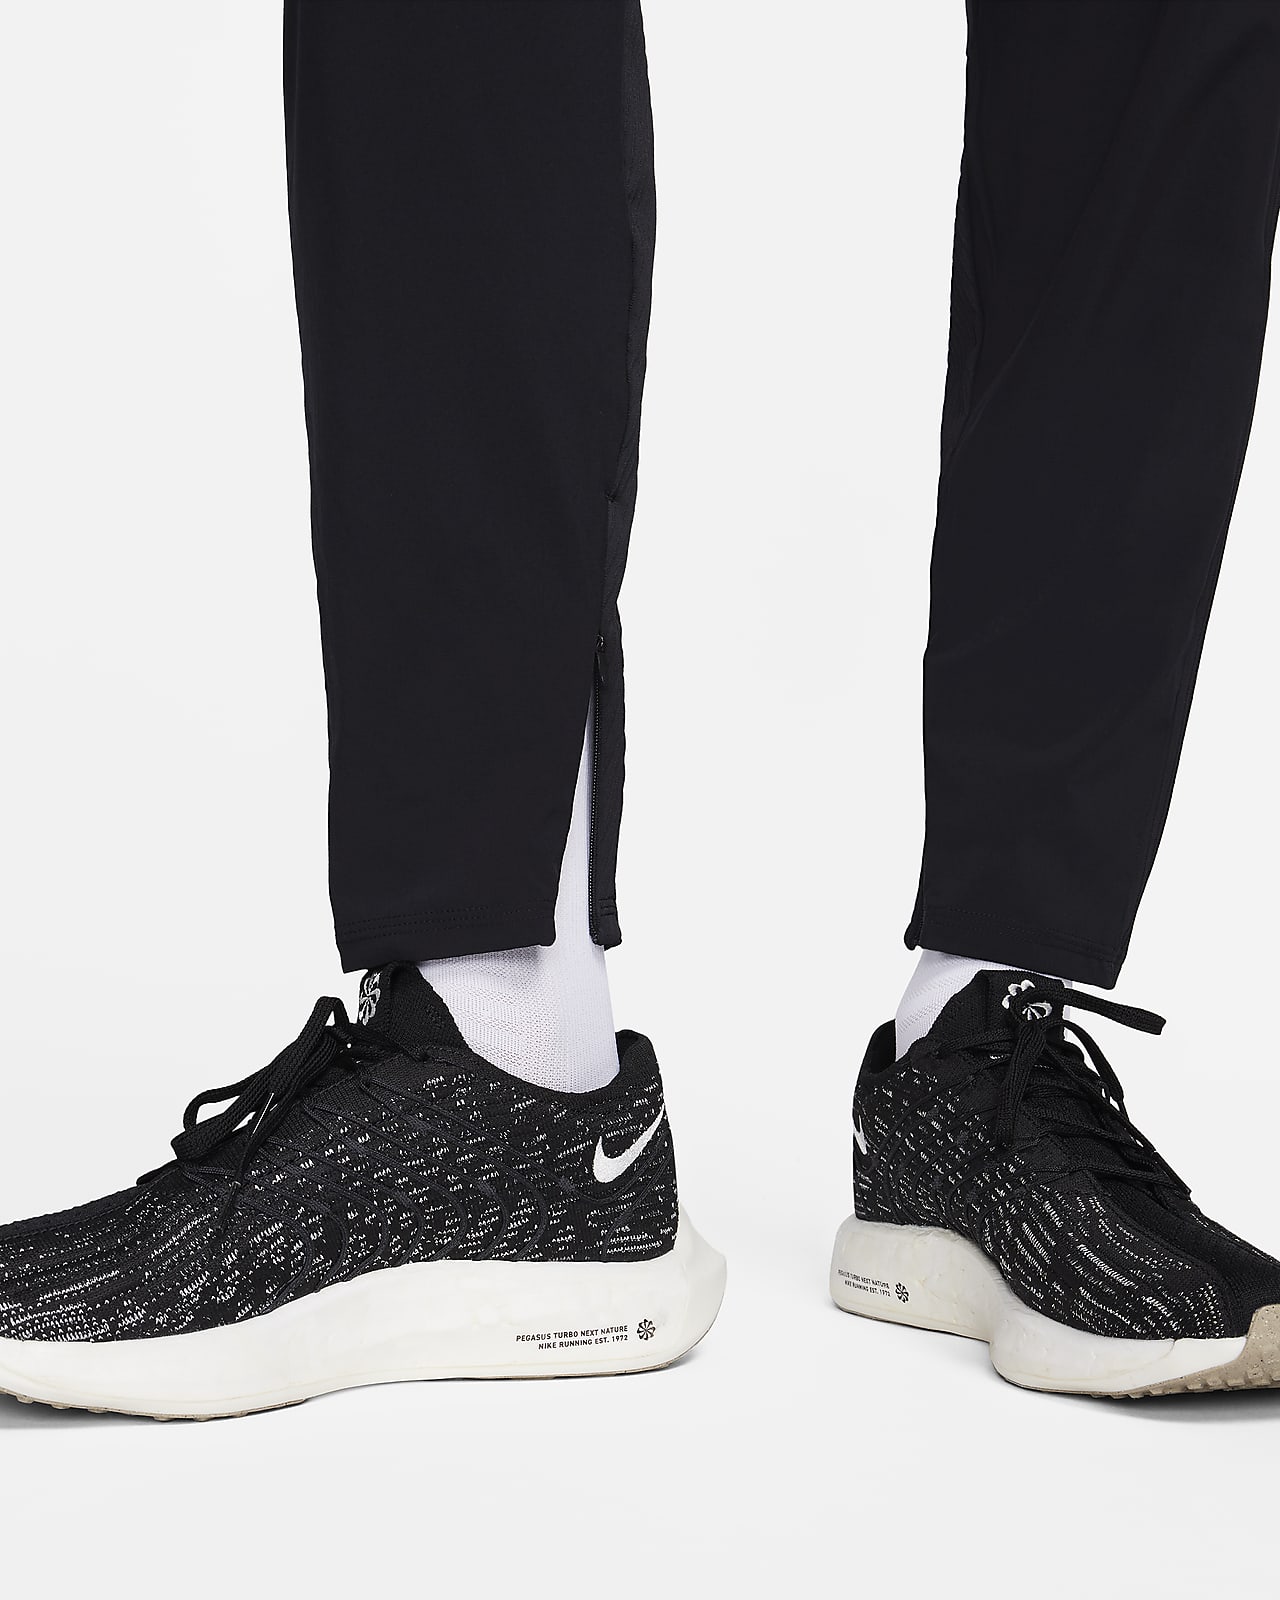 Mens Nike Aeroswift 1/2 Length Running Tights Dark Teal Shorts XL